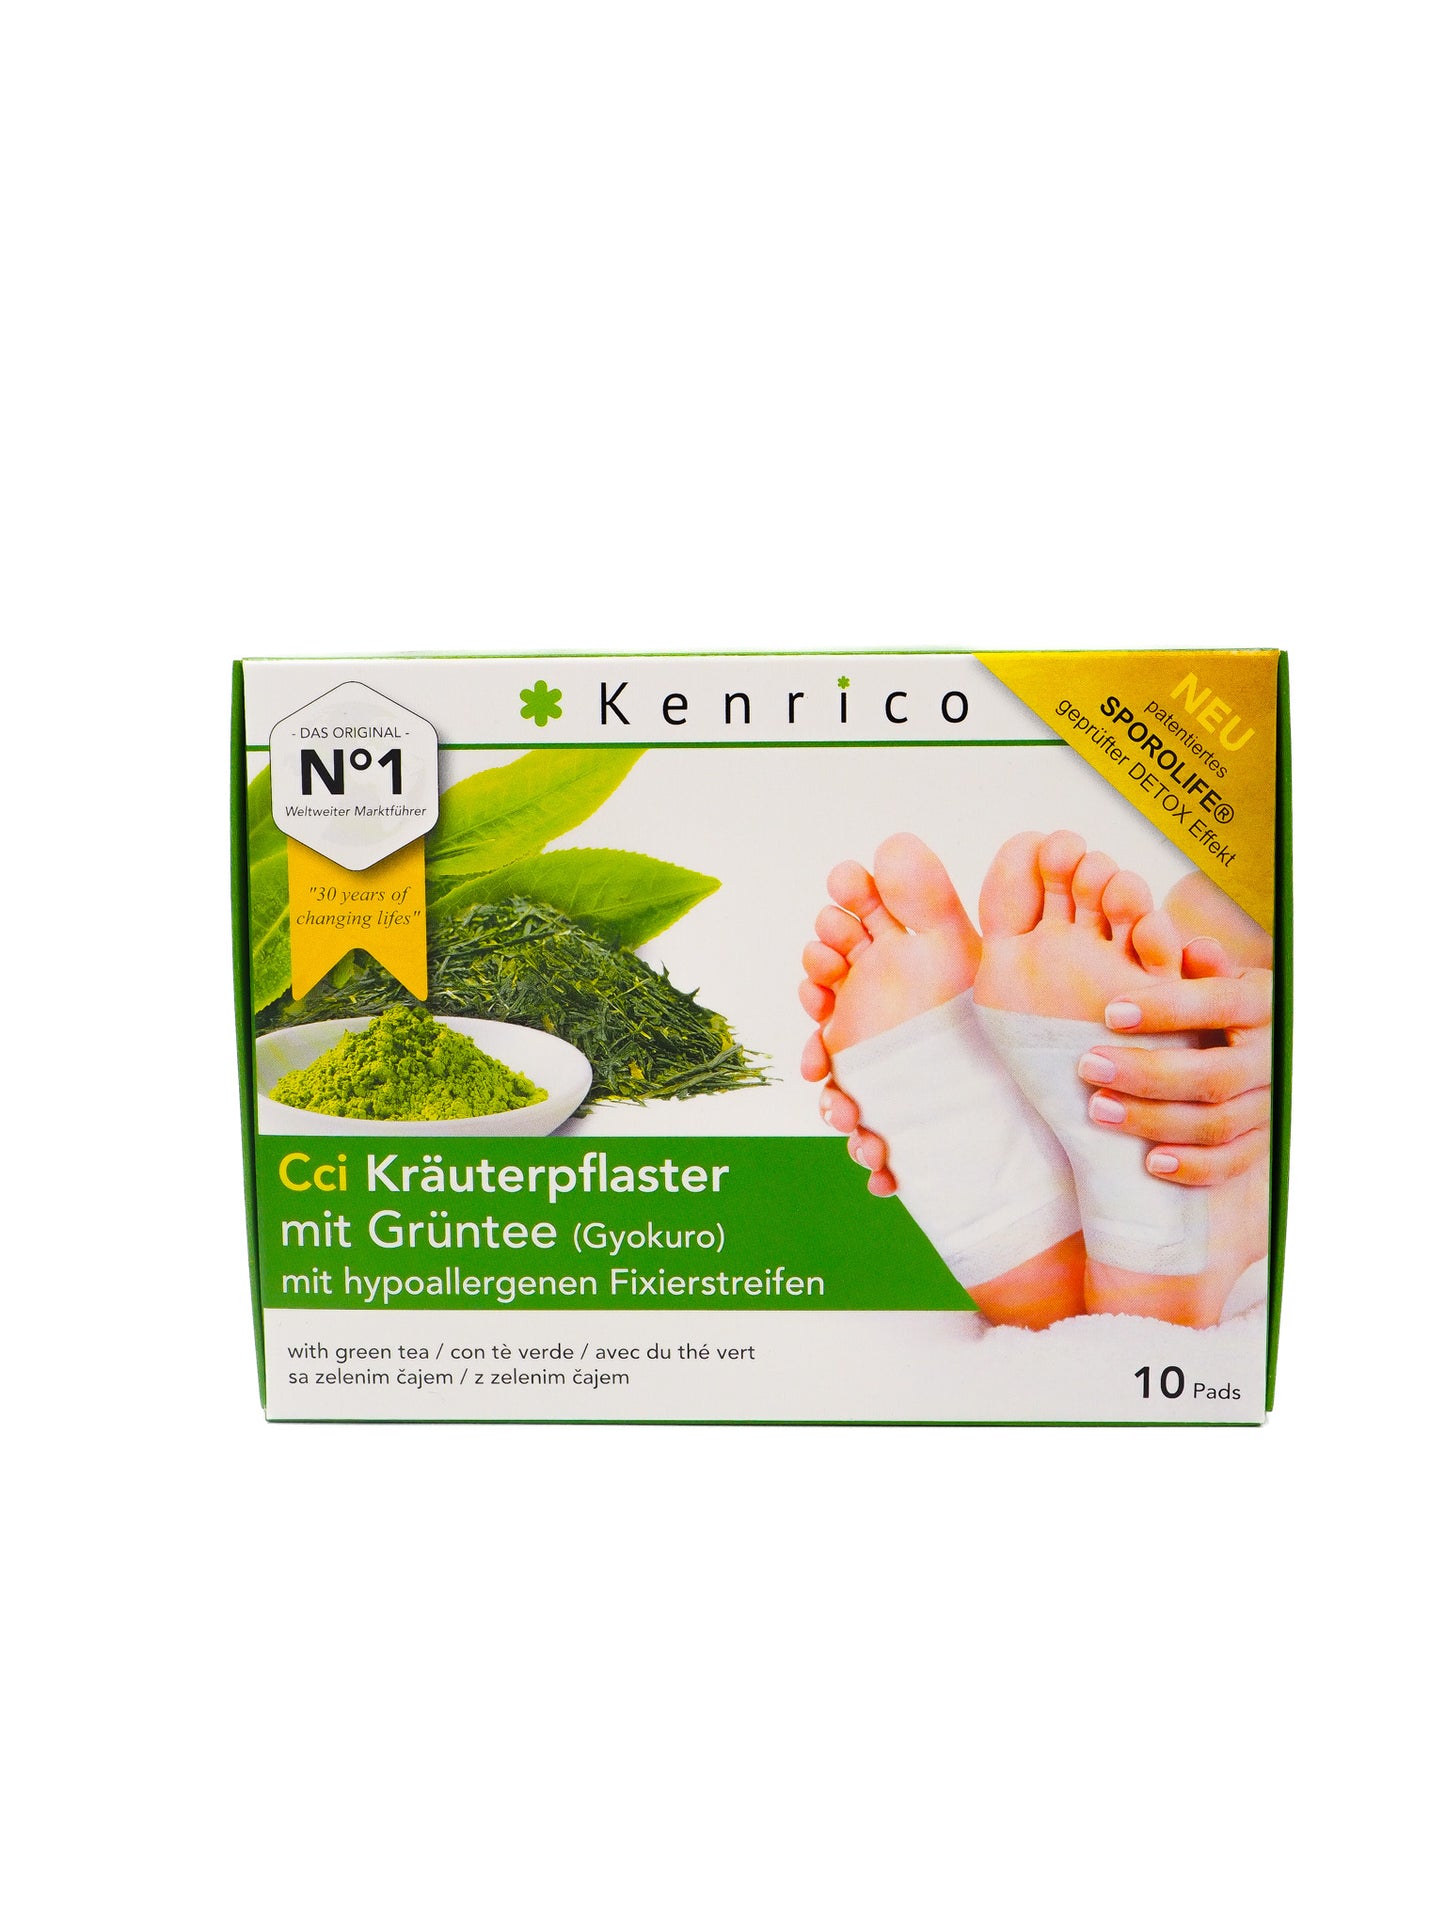 Kenrico® Cci Herbal Plasters with Green Tea (Gyokuro)